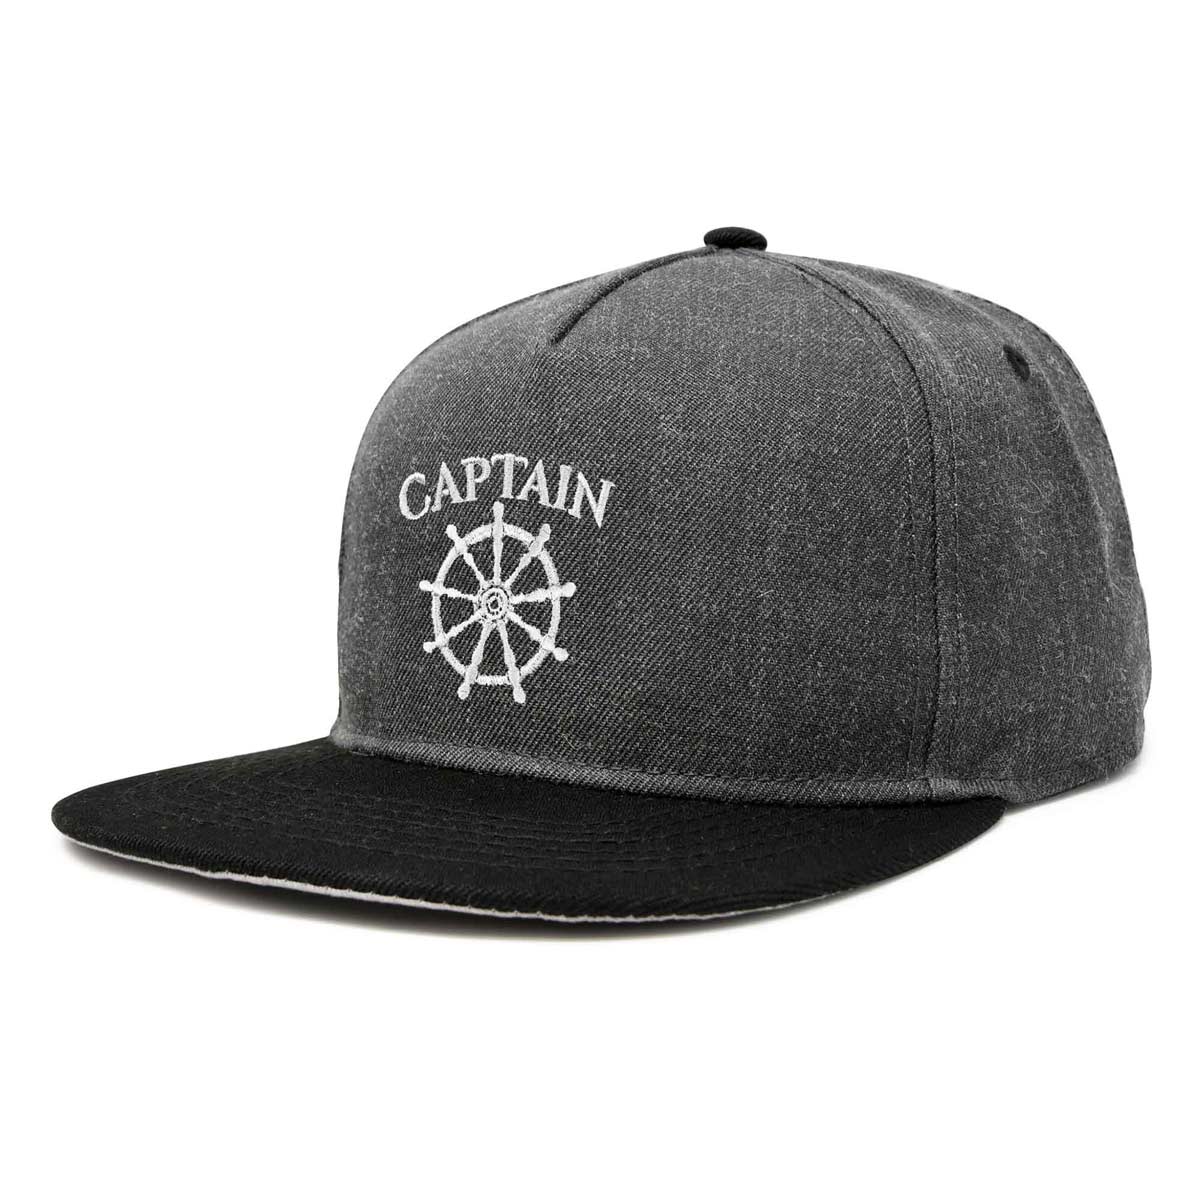 Dalix Captain Snapback Flat Bill Baseball Hat Embroidered Cap Mens in Dark Gray